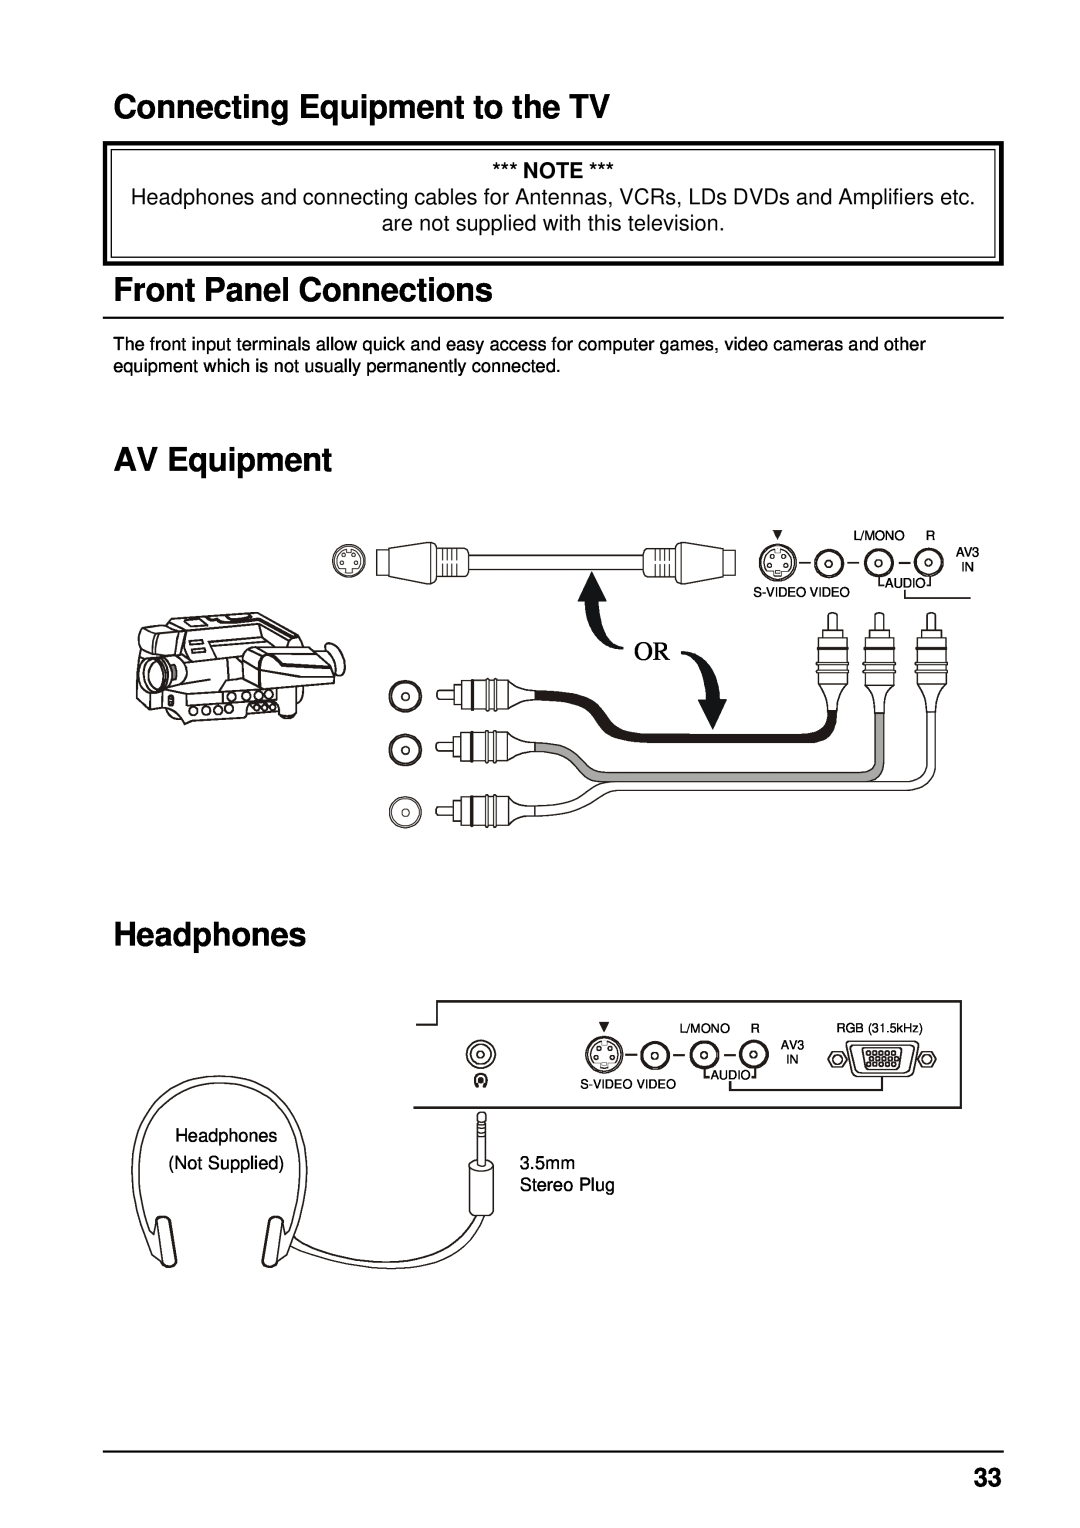 Panasonic TX-68P200A Connecting Equipment to the TV, Front Panel Connections, AV Equipment, Headphones, L/Mono R, Audio 